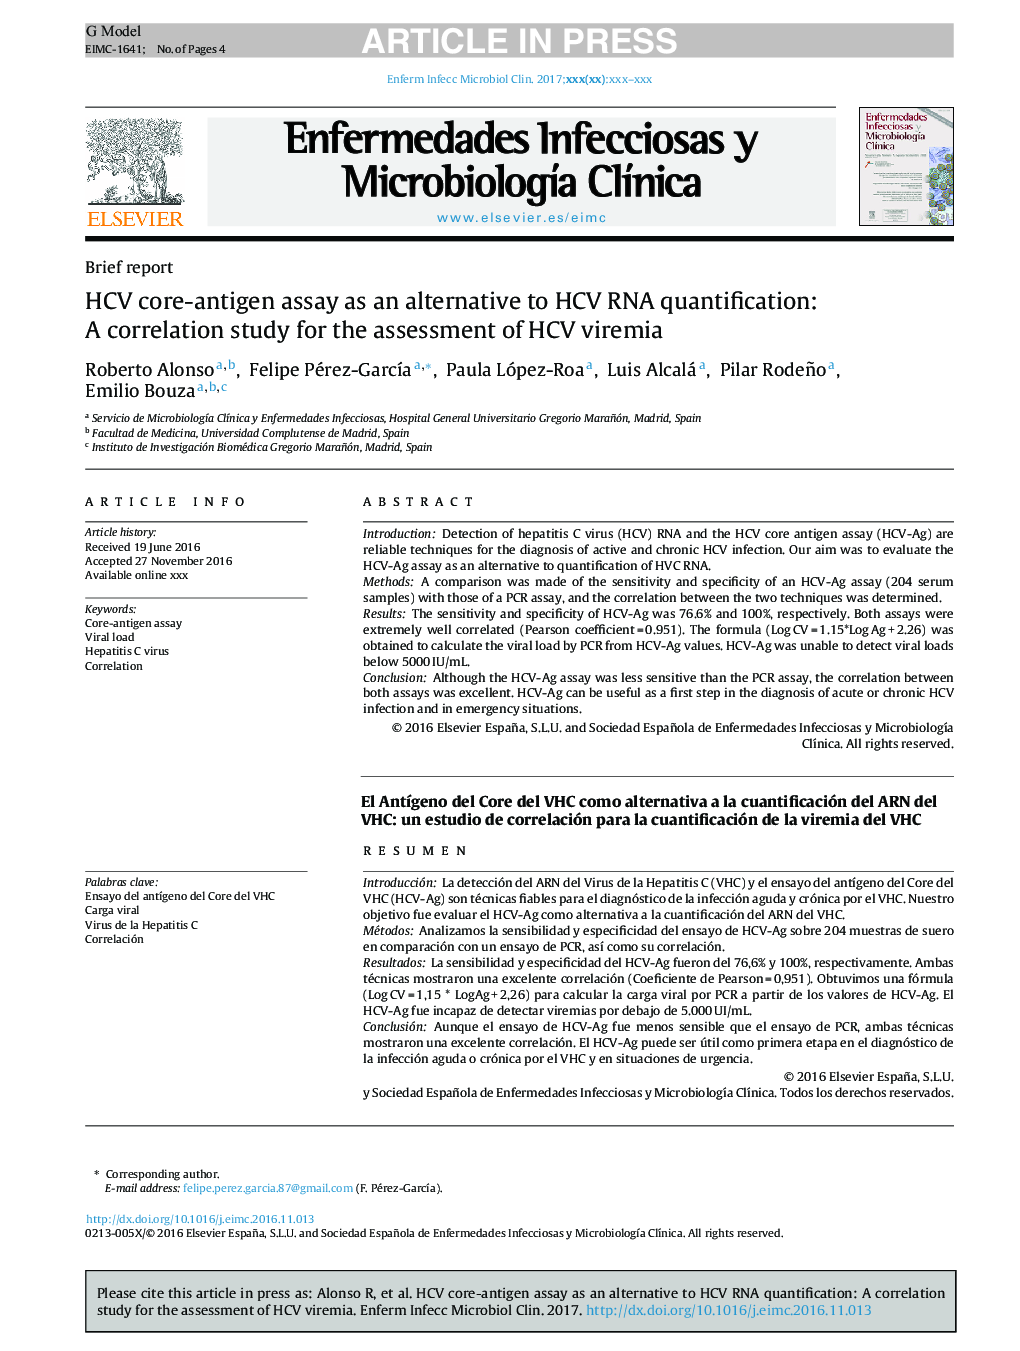 HCV core-antigen assay as an alternative to HCV RNA quantification: A correlation study for the assessment of HCV viremia